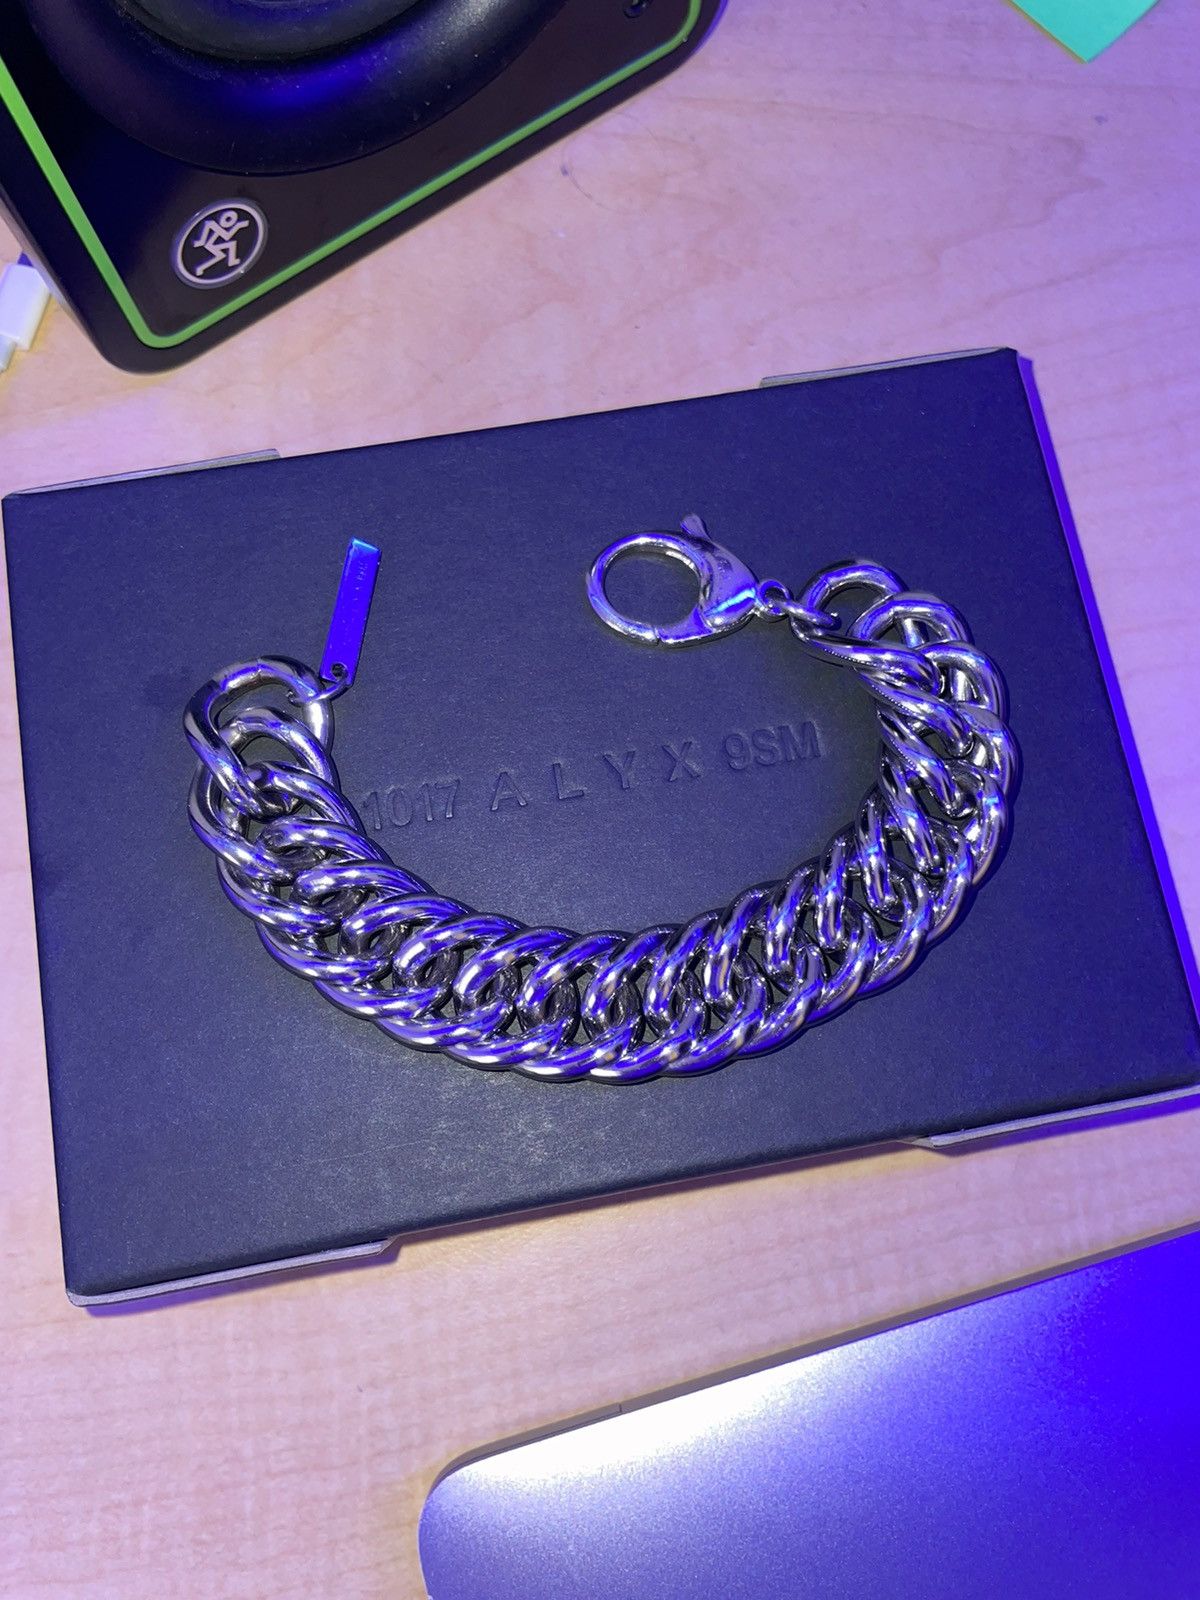 1017 ALYX 9SM 1017 Alyx 9SM Chunky Chain Bracelet in Silver | Grailed